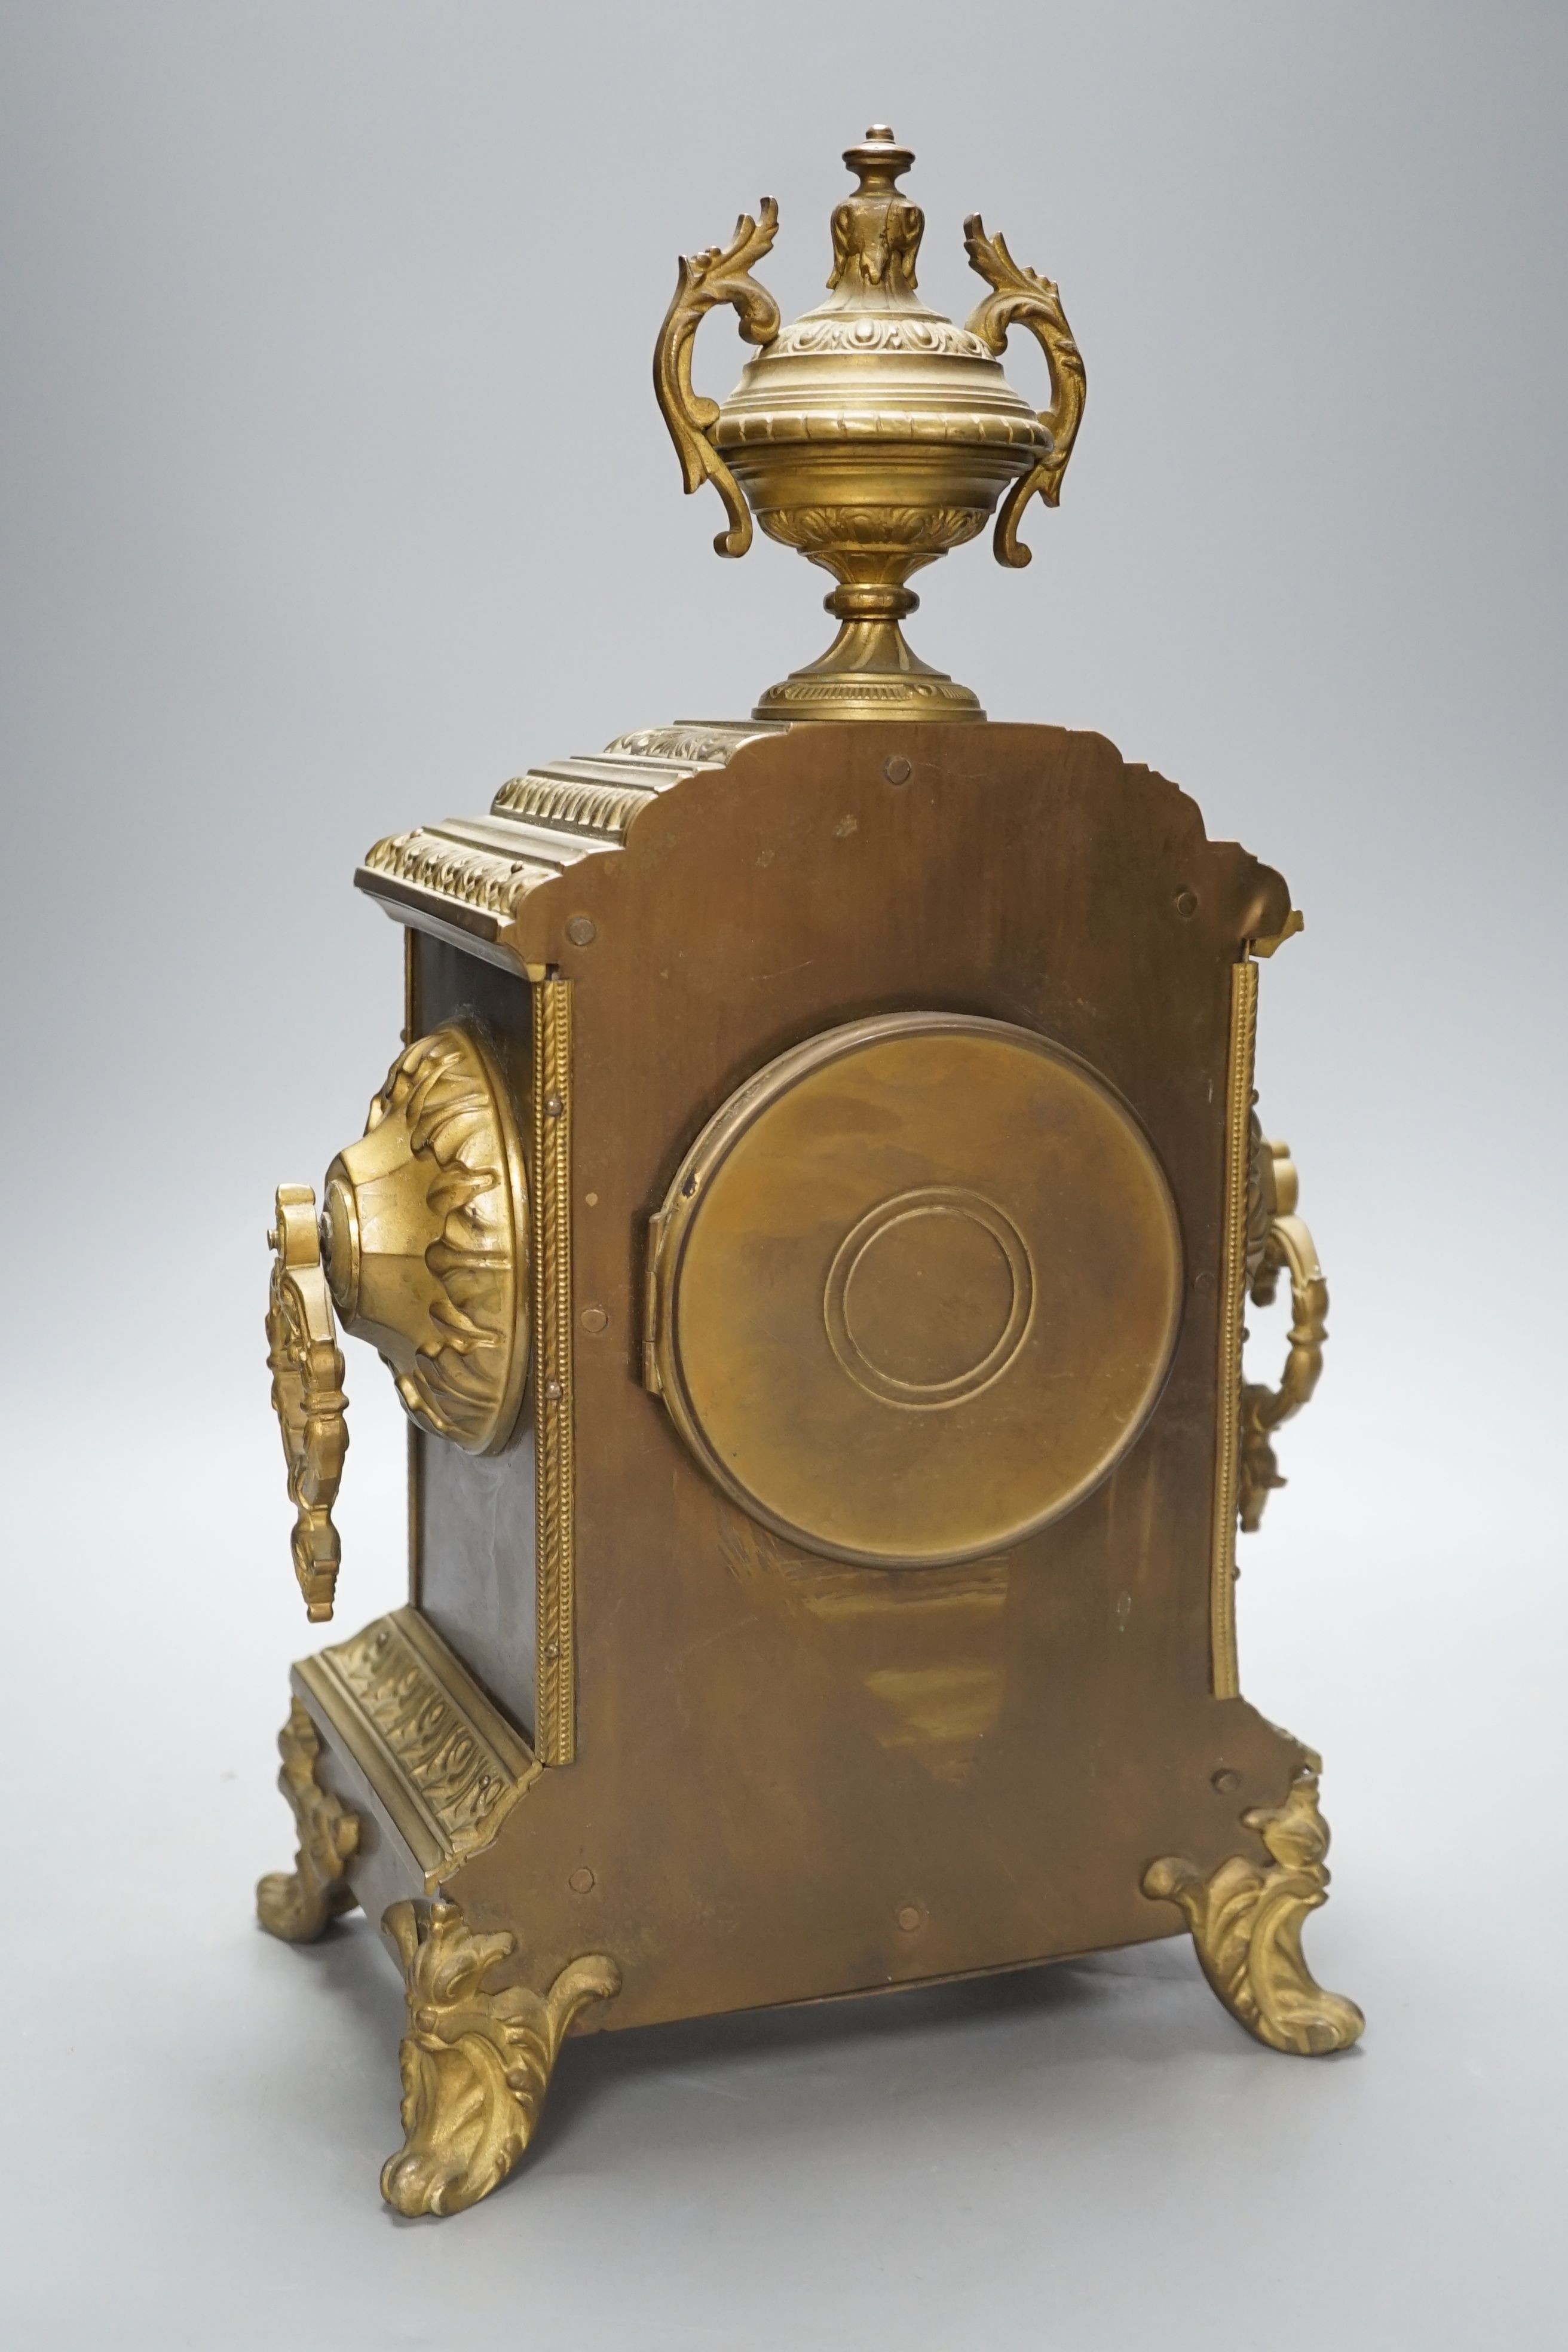 An early 20th century brass mantel clock, 40 cms high.